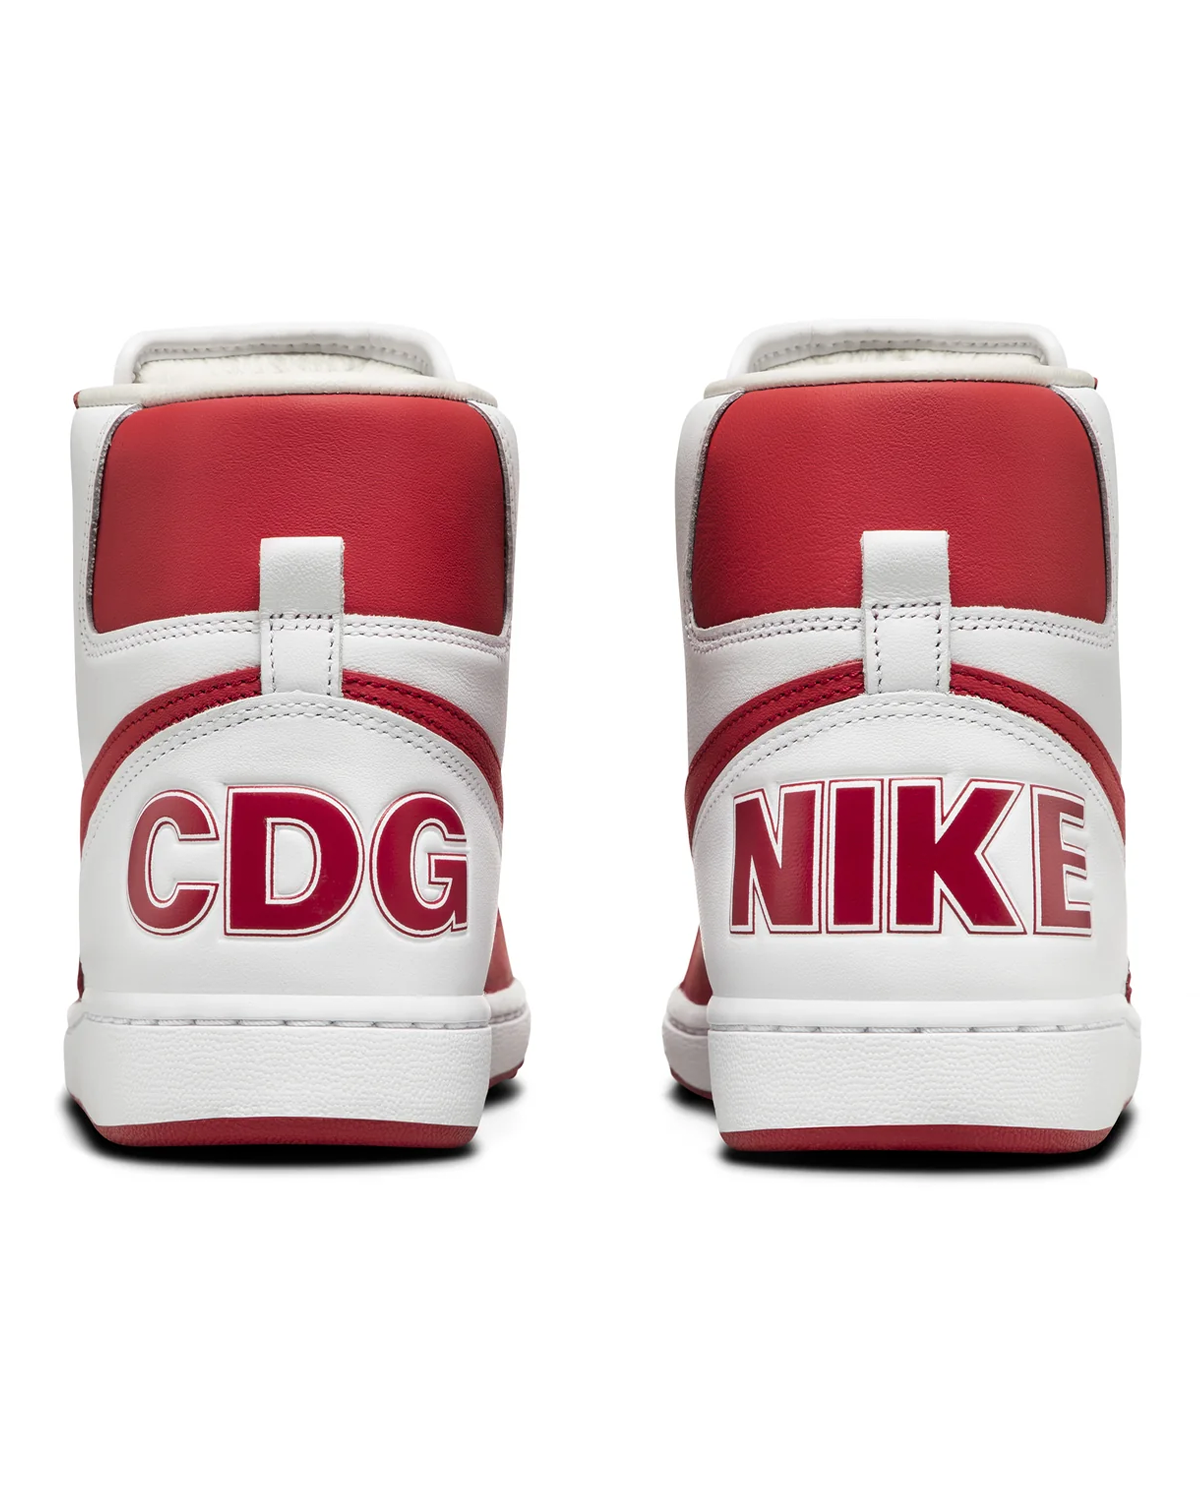 CDG x Nike Terminator High Red